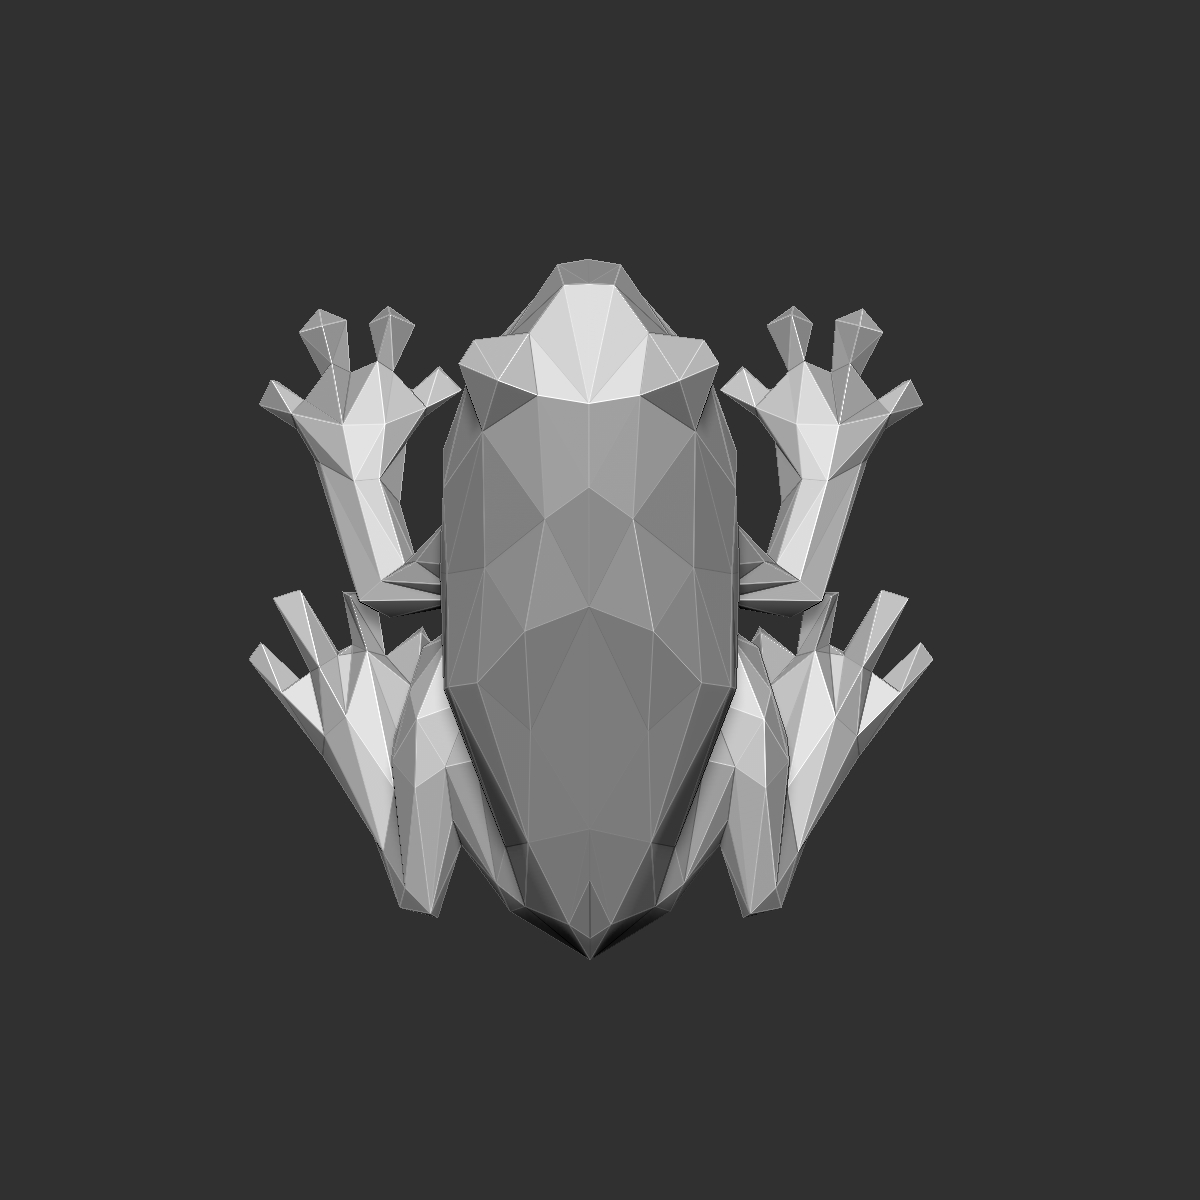 Stl file low poly frog ðãd printer design to downloadãcults